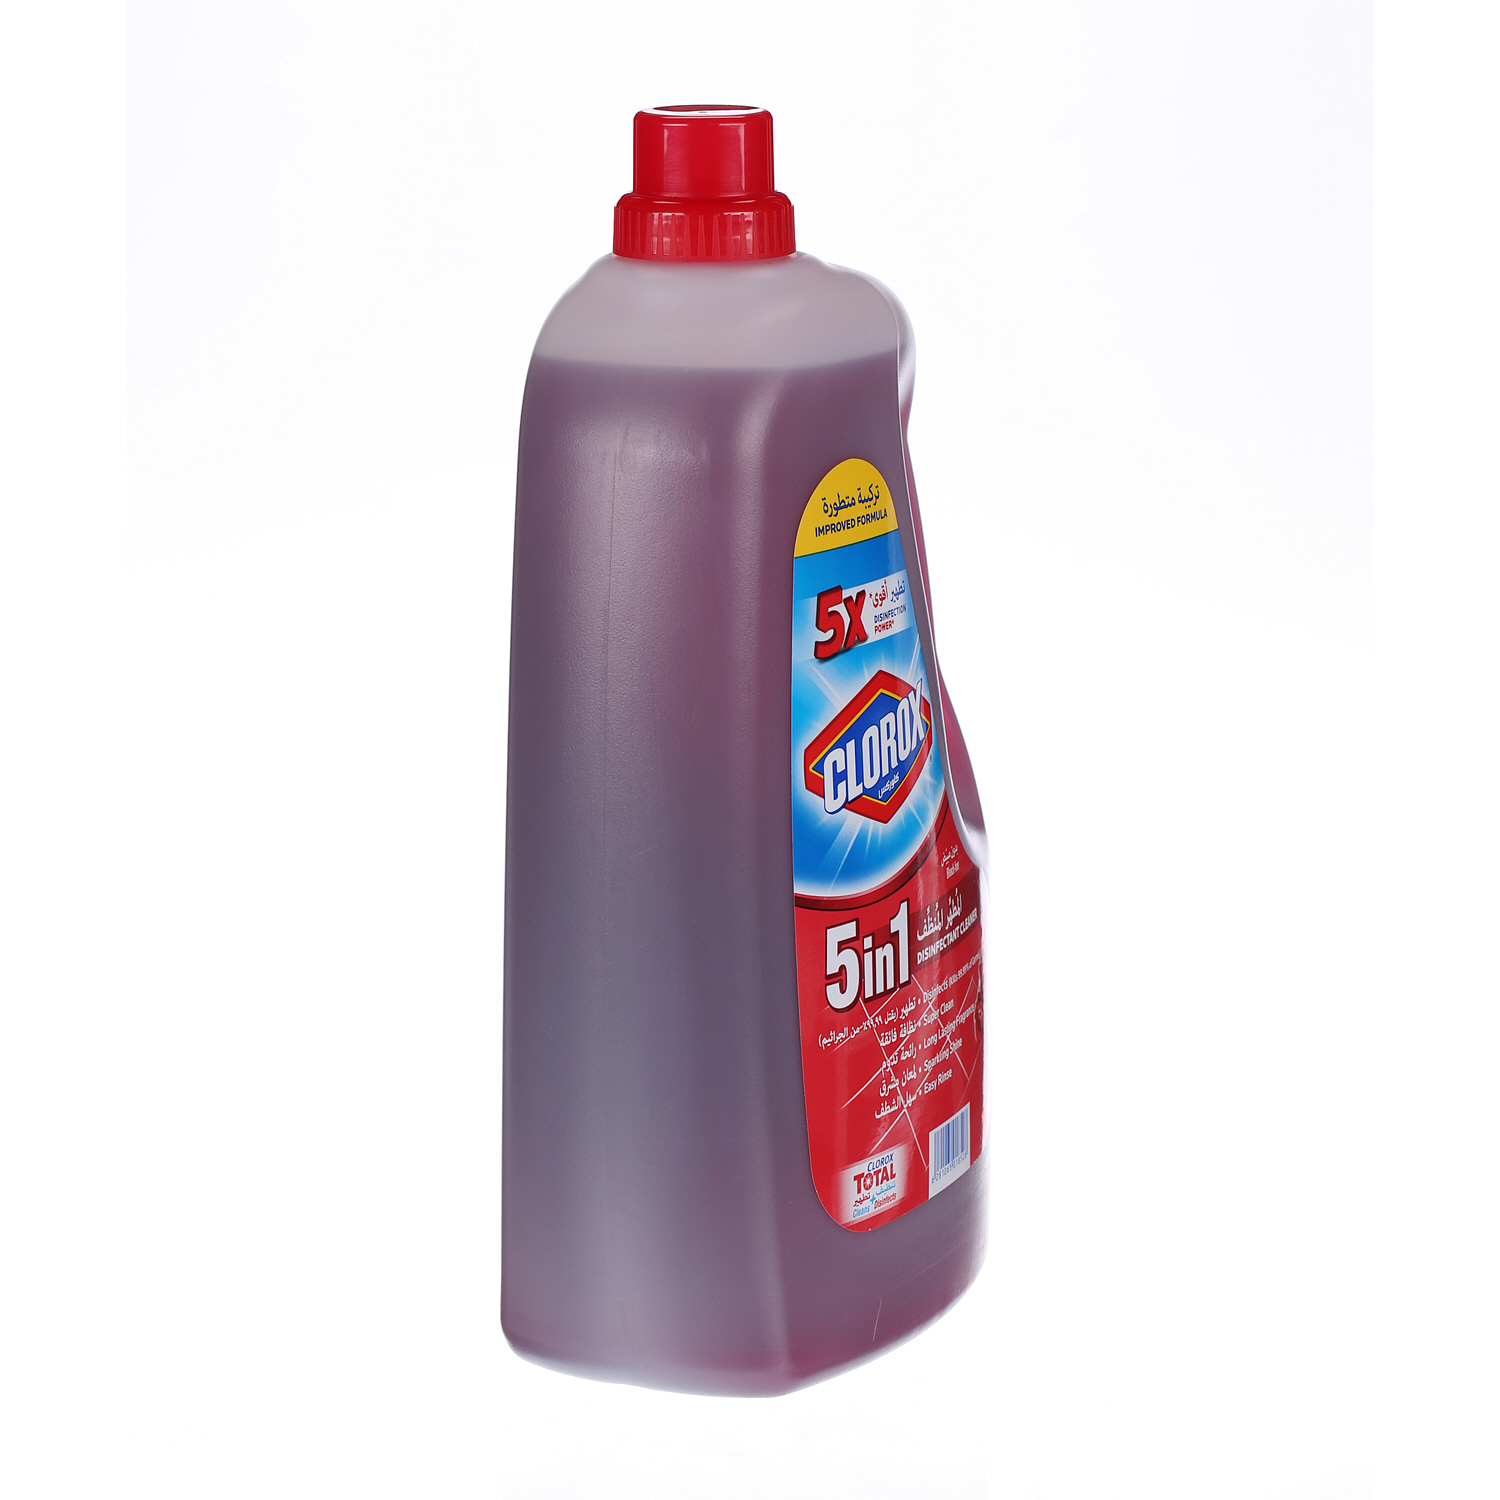 Clorox Disinfectant Cleaner non Bleach Rose 3Ltr